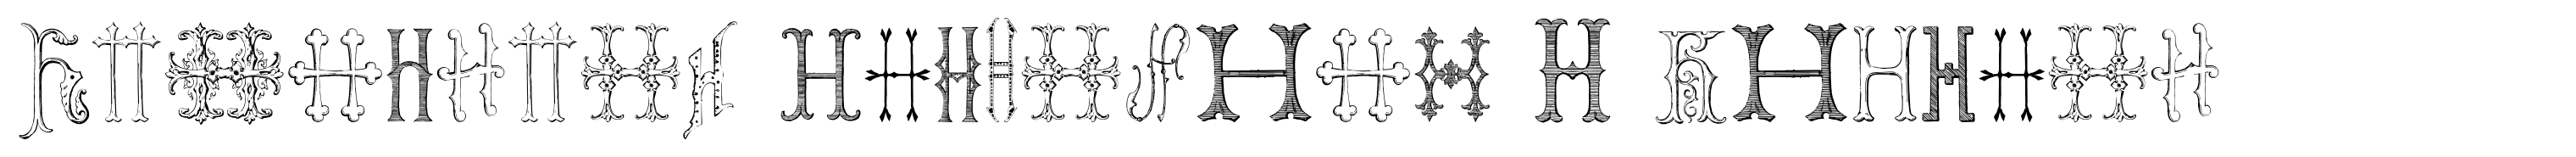 Victorian Alphabets H Regular